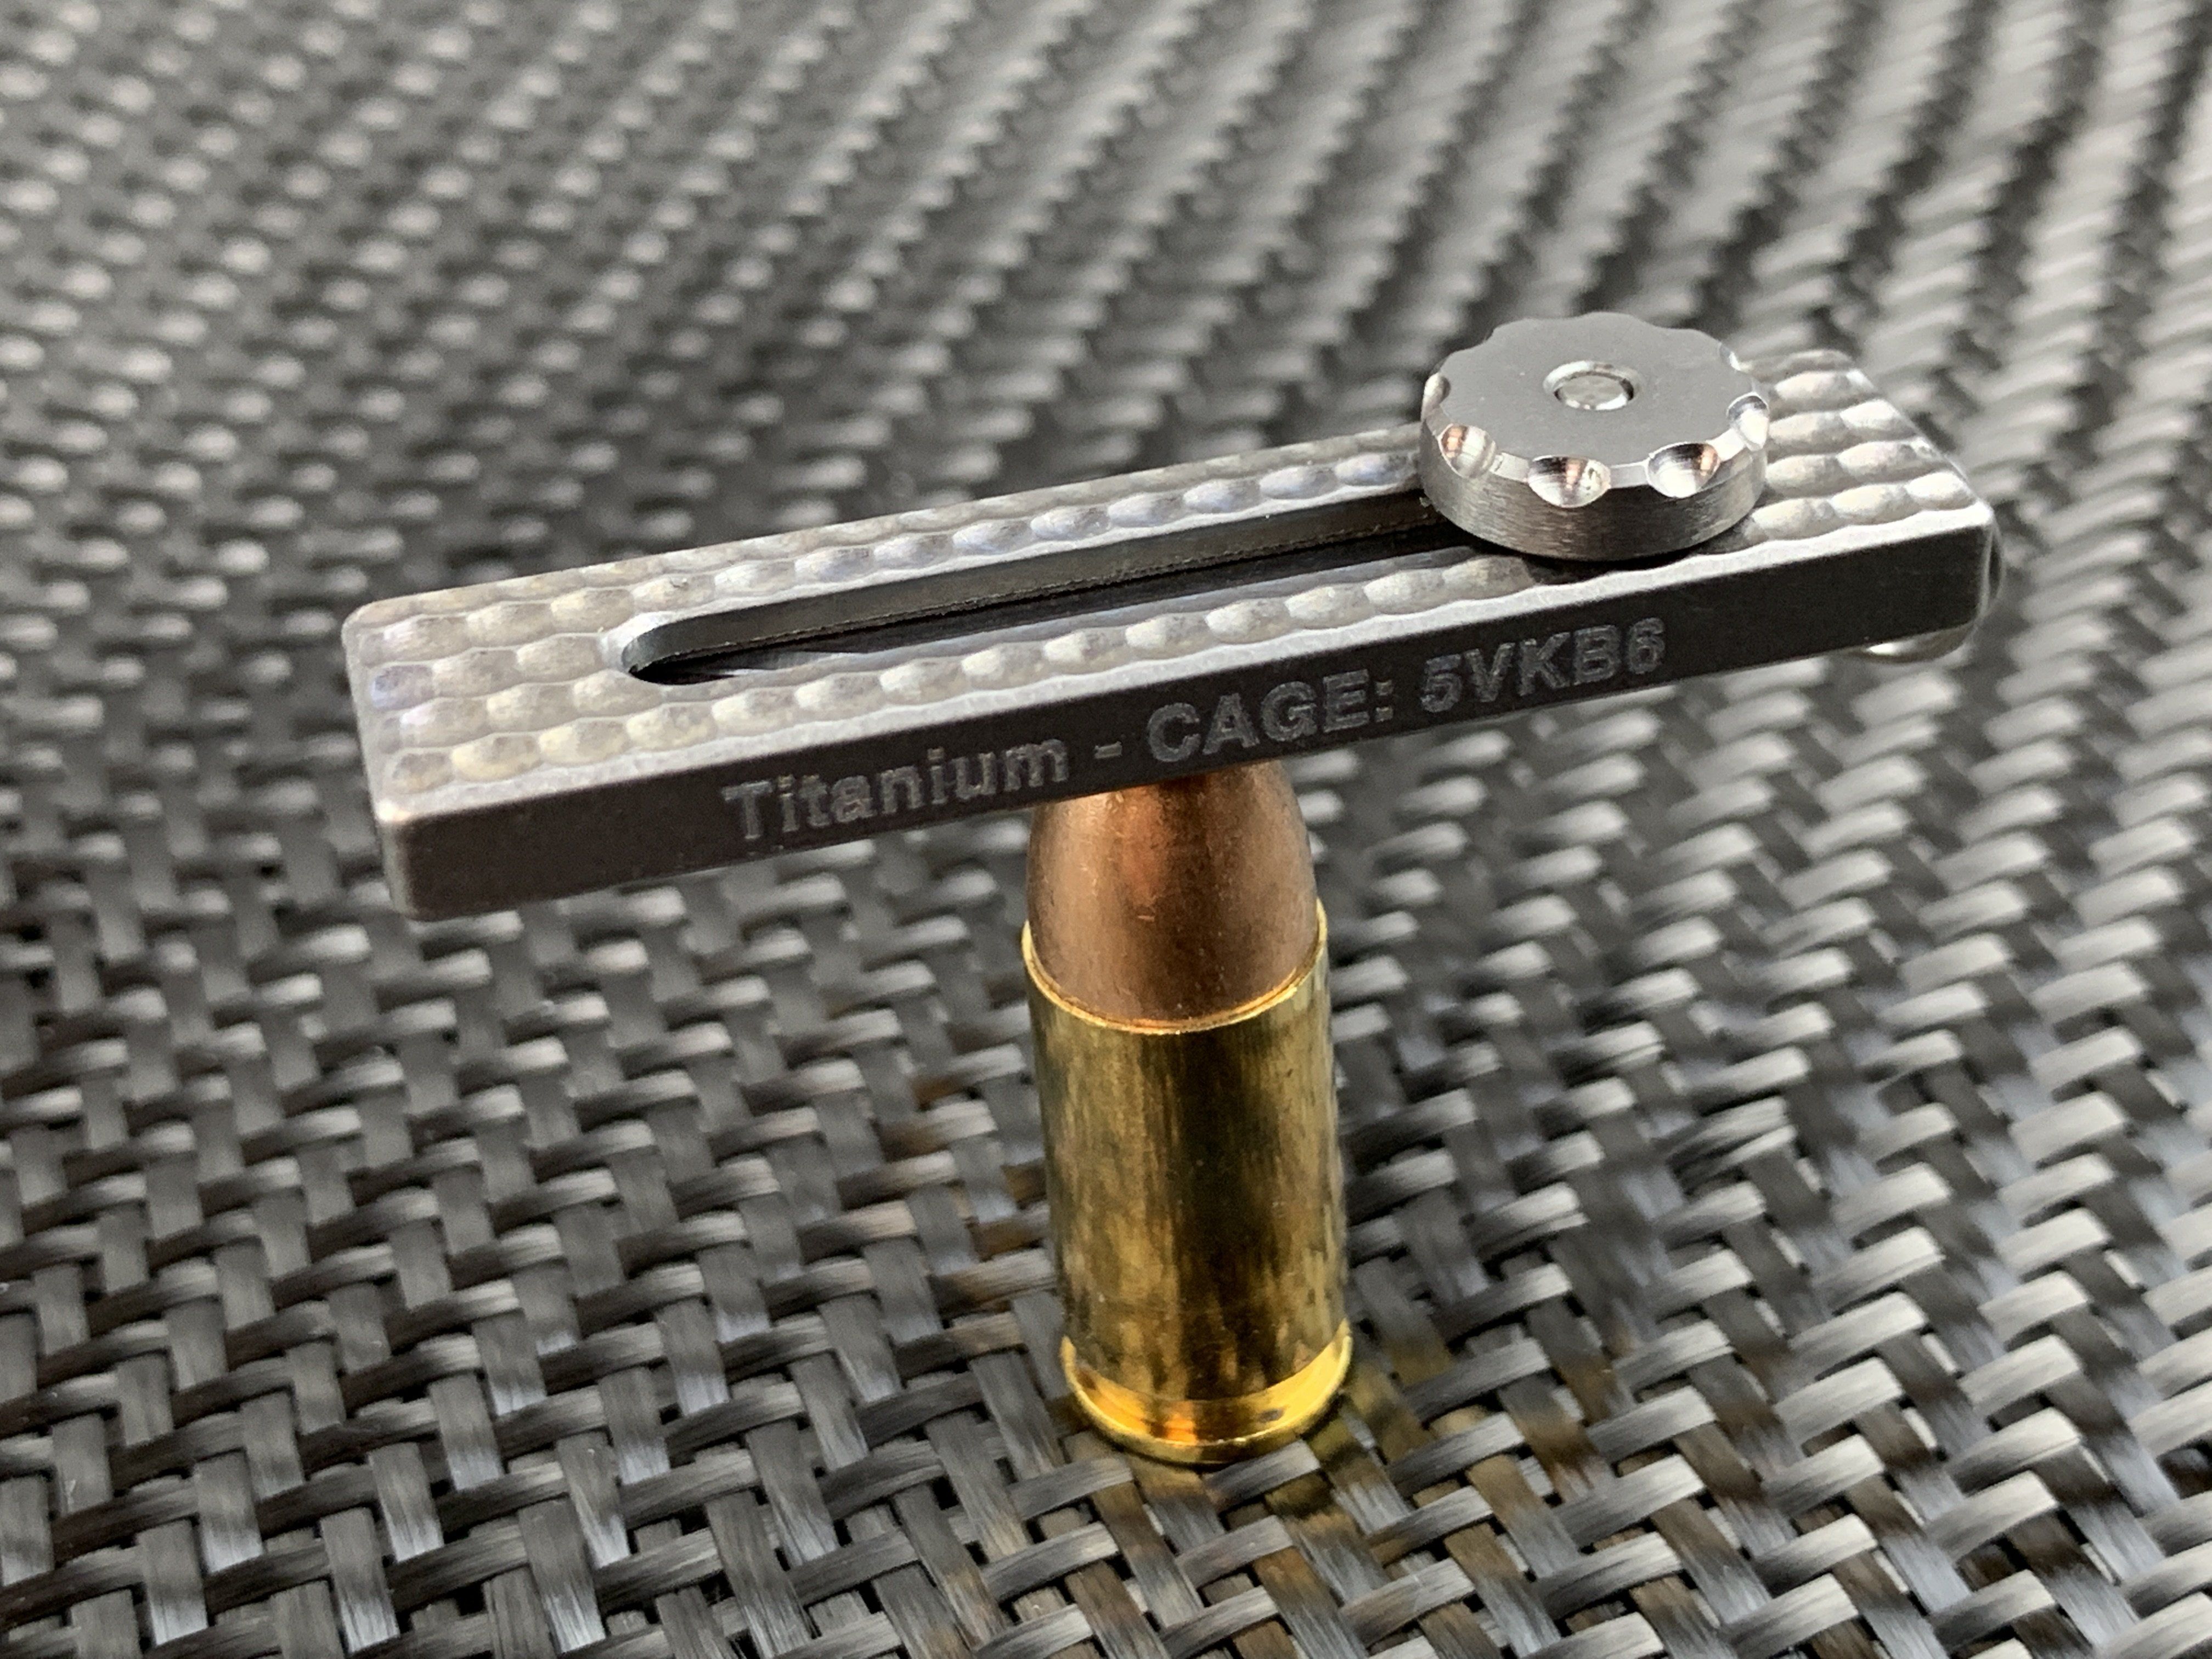 CountyComm Ti-Grip Precision Hobby Knife Titanium w/ 16 blades - REC